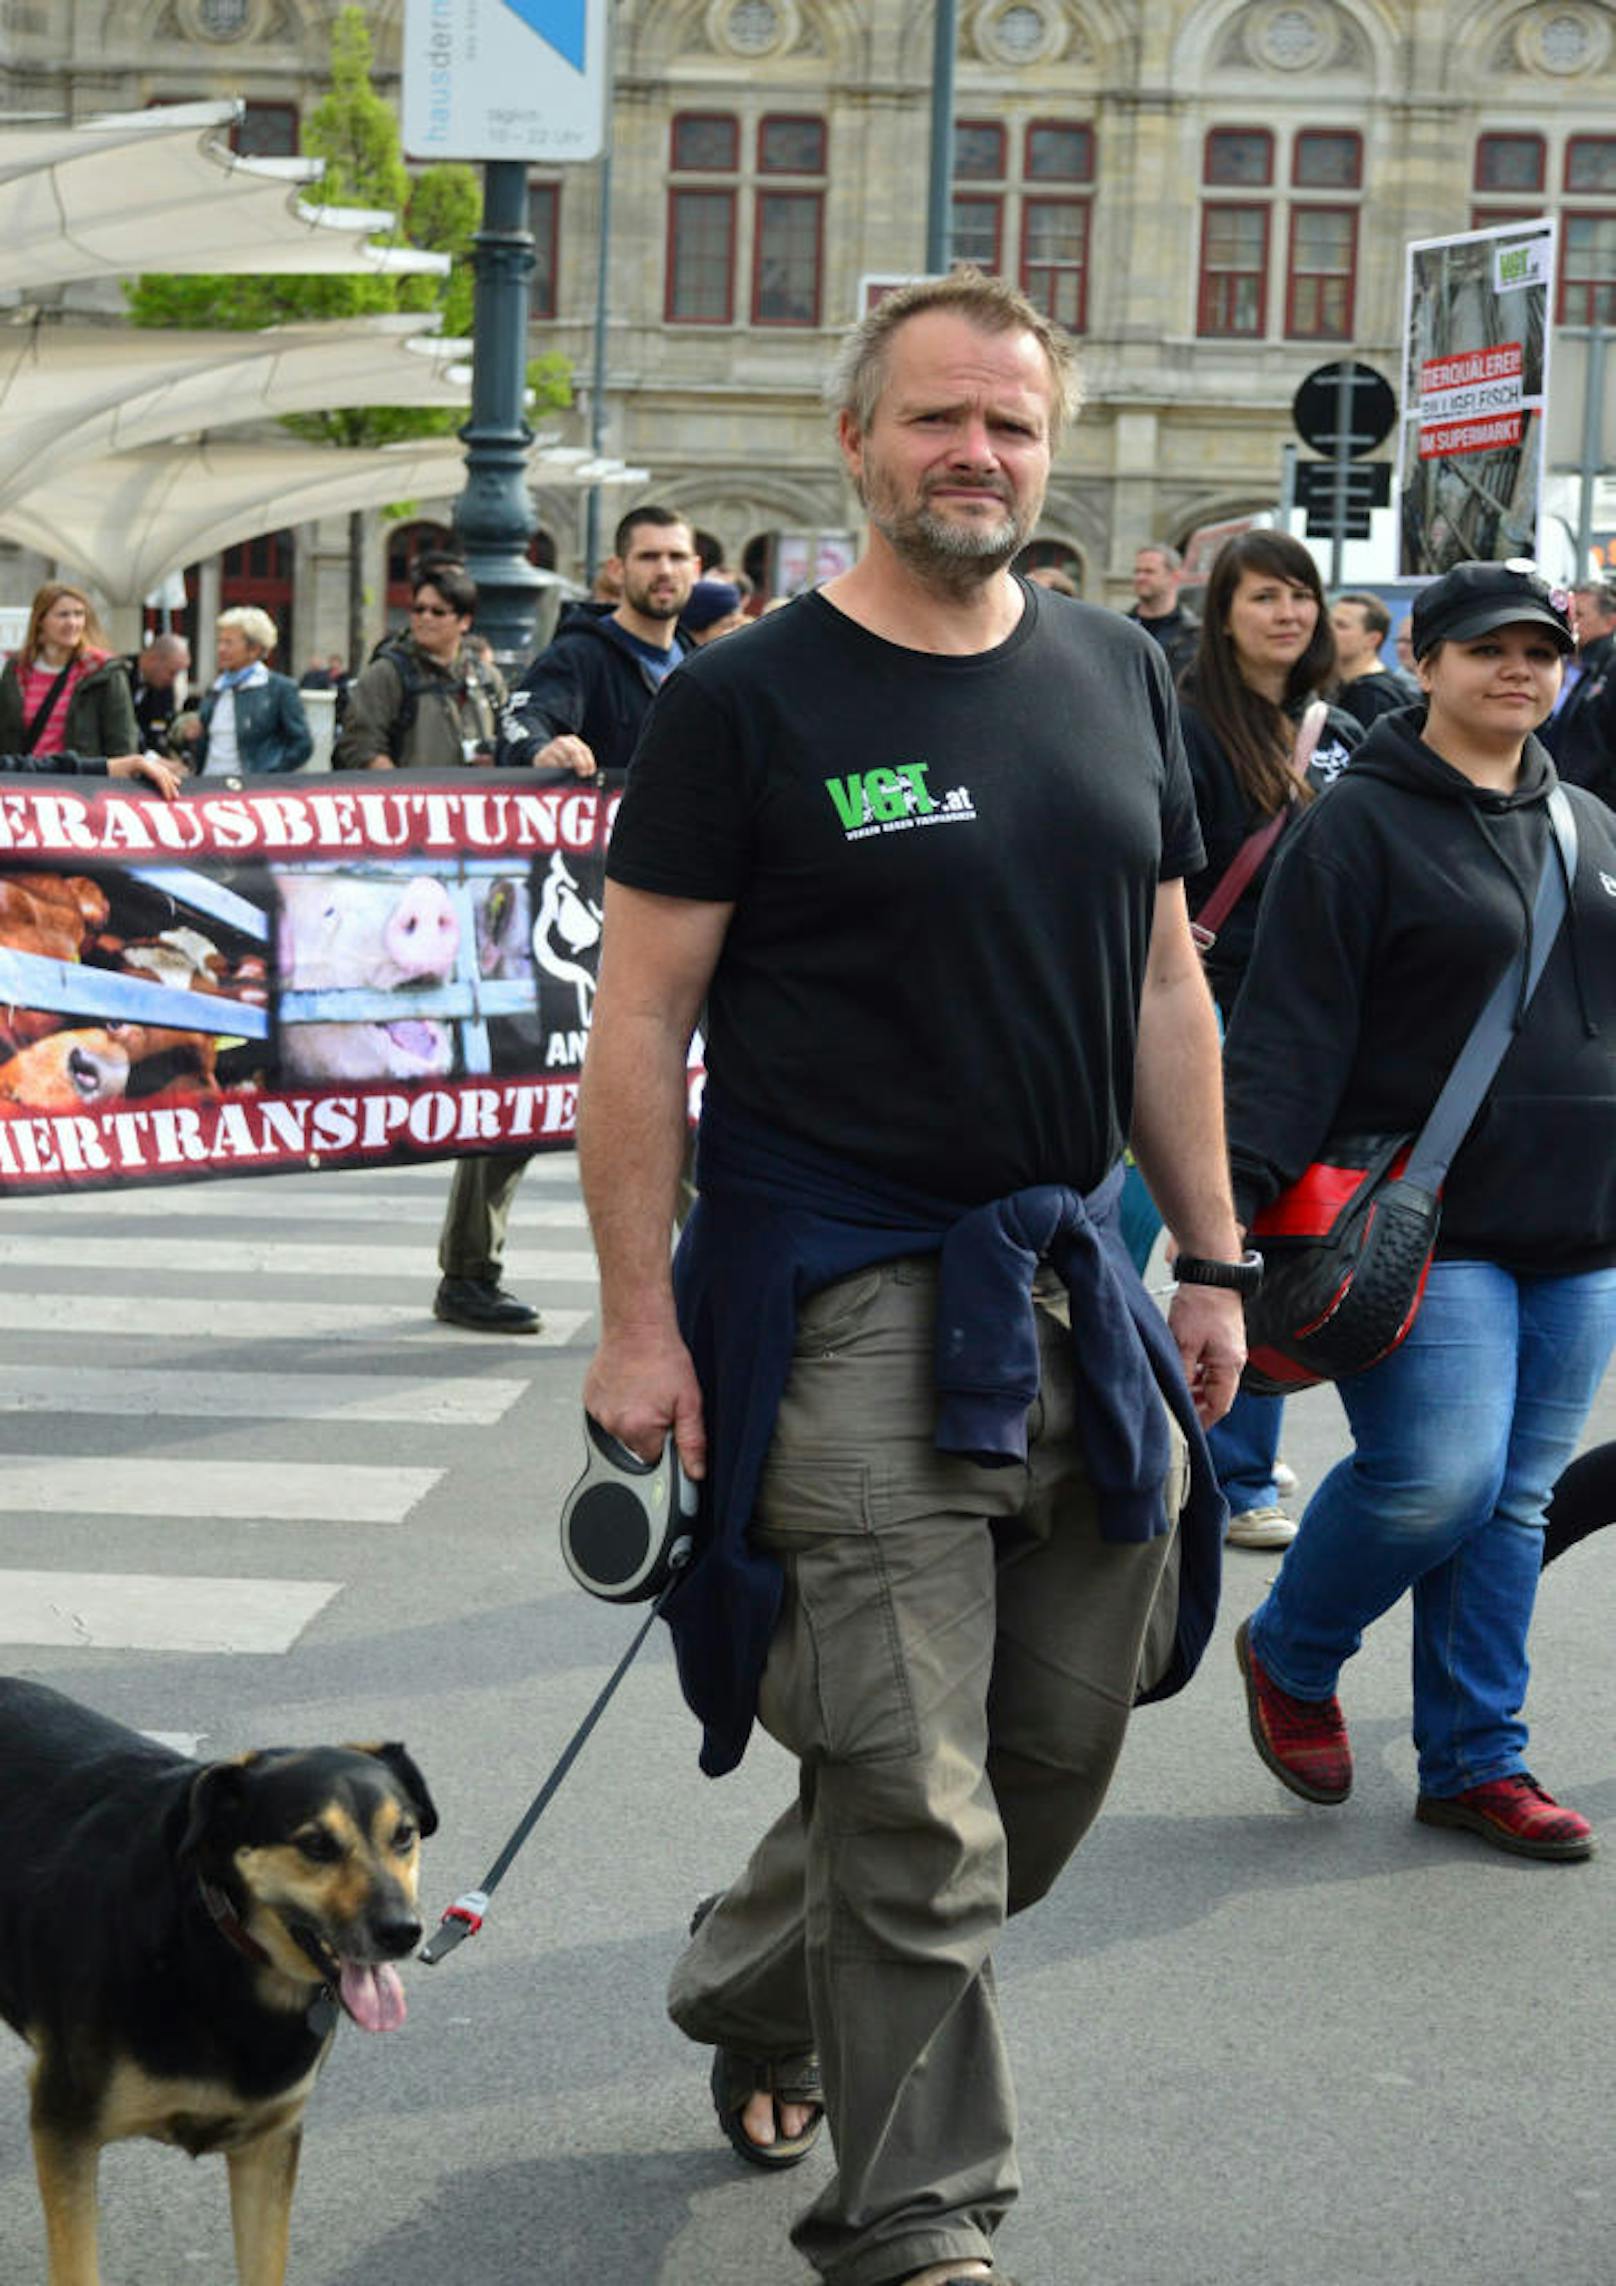 Tierrechtsaktivist Martin Balluch beim Protestmarsch gegen Gatterjagd.